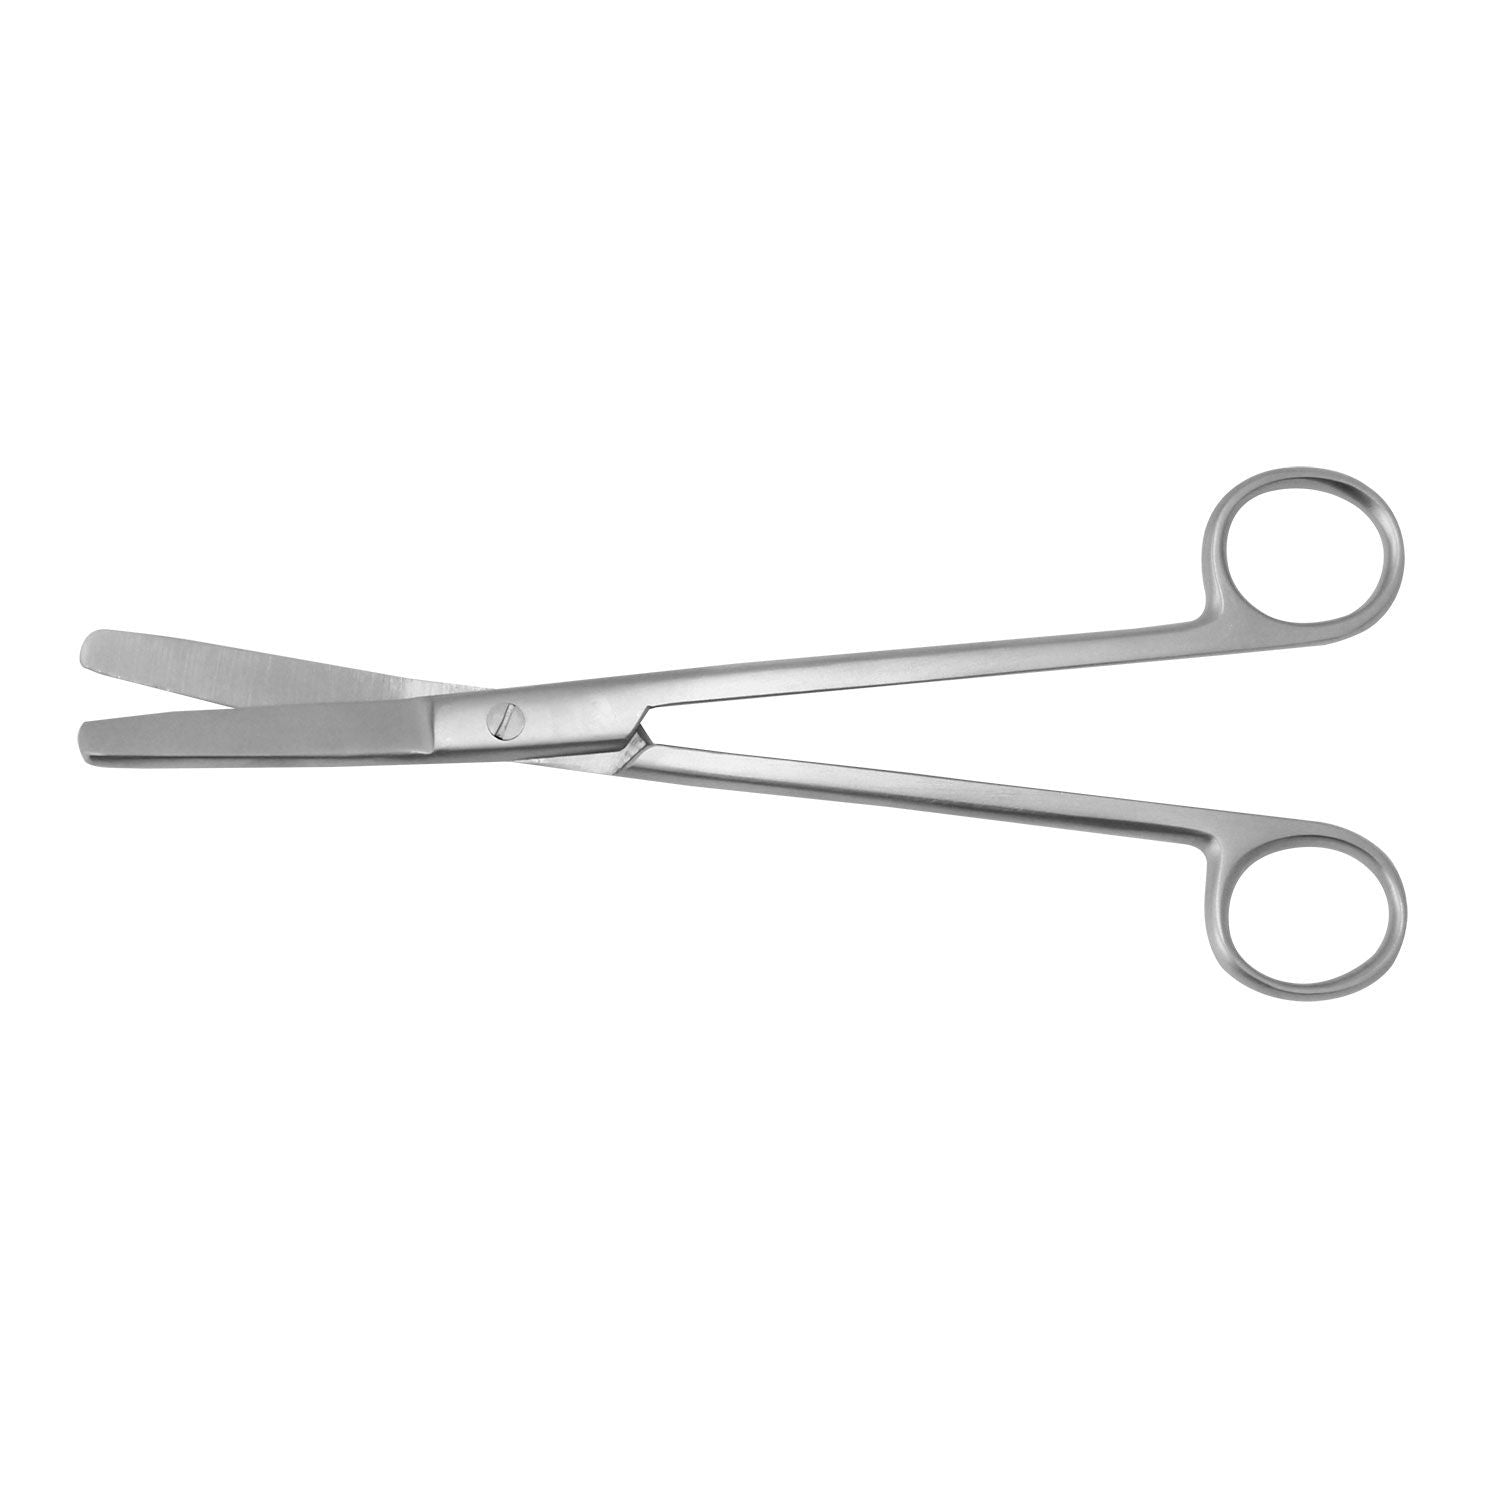 Instramed Currie Uterine Scissors | Curved | 20cm